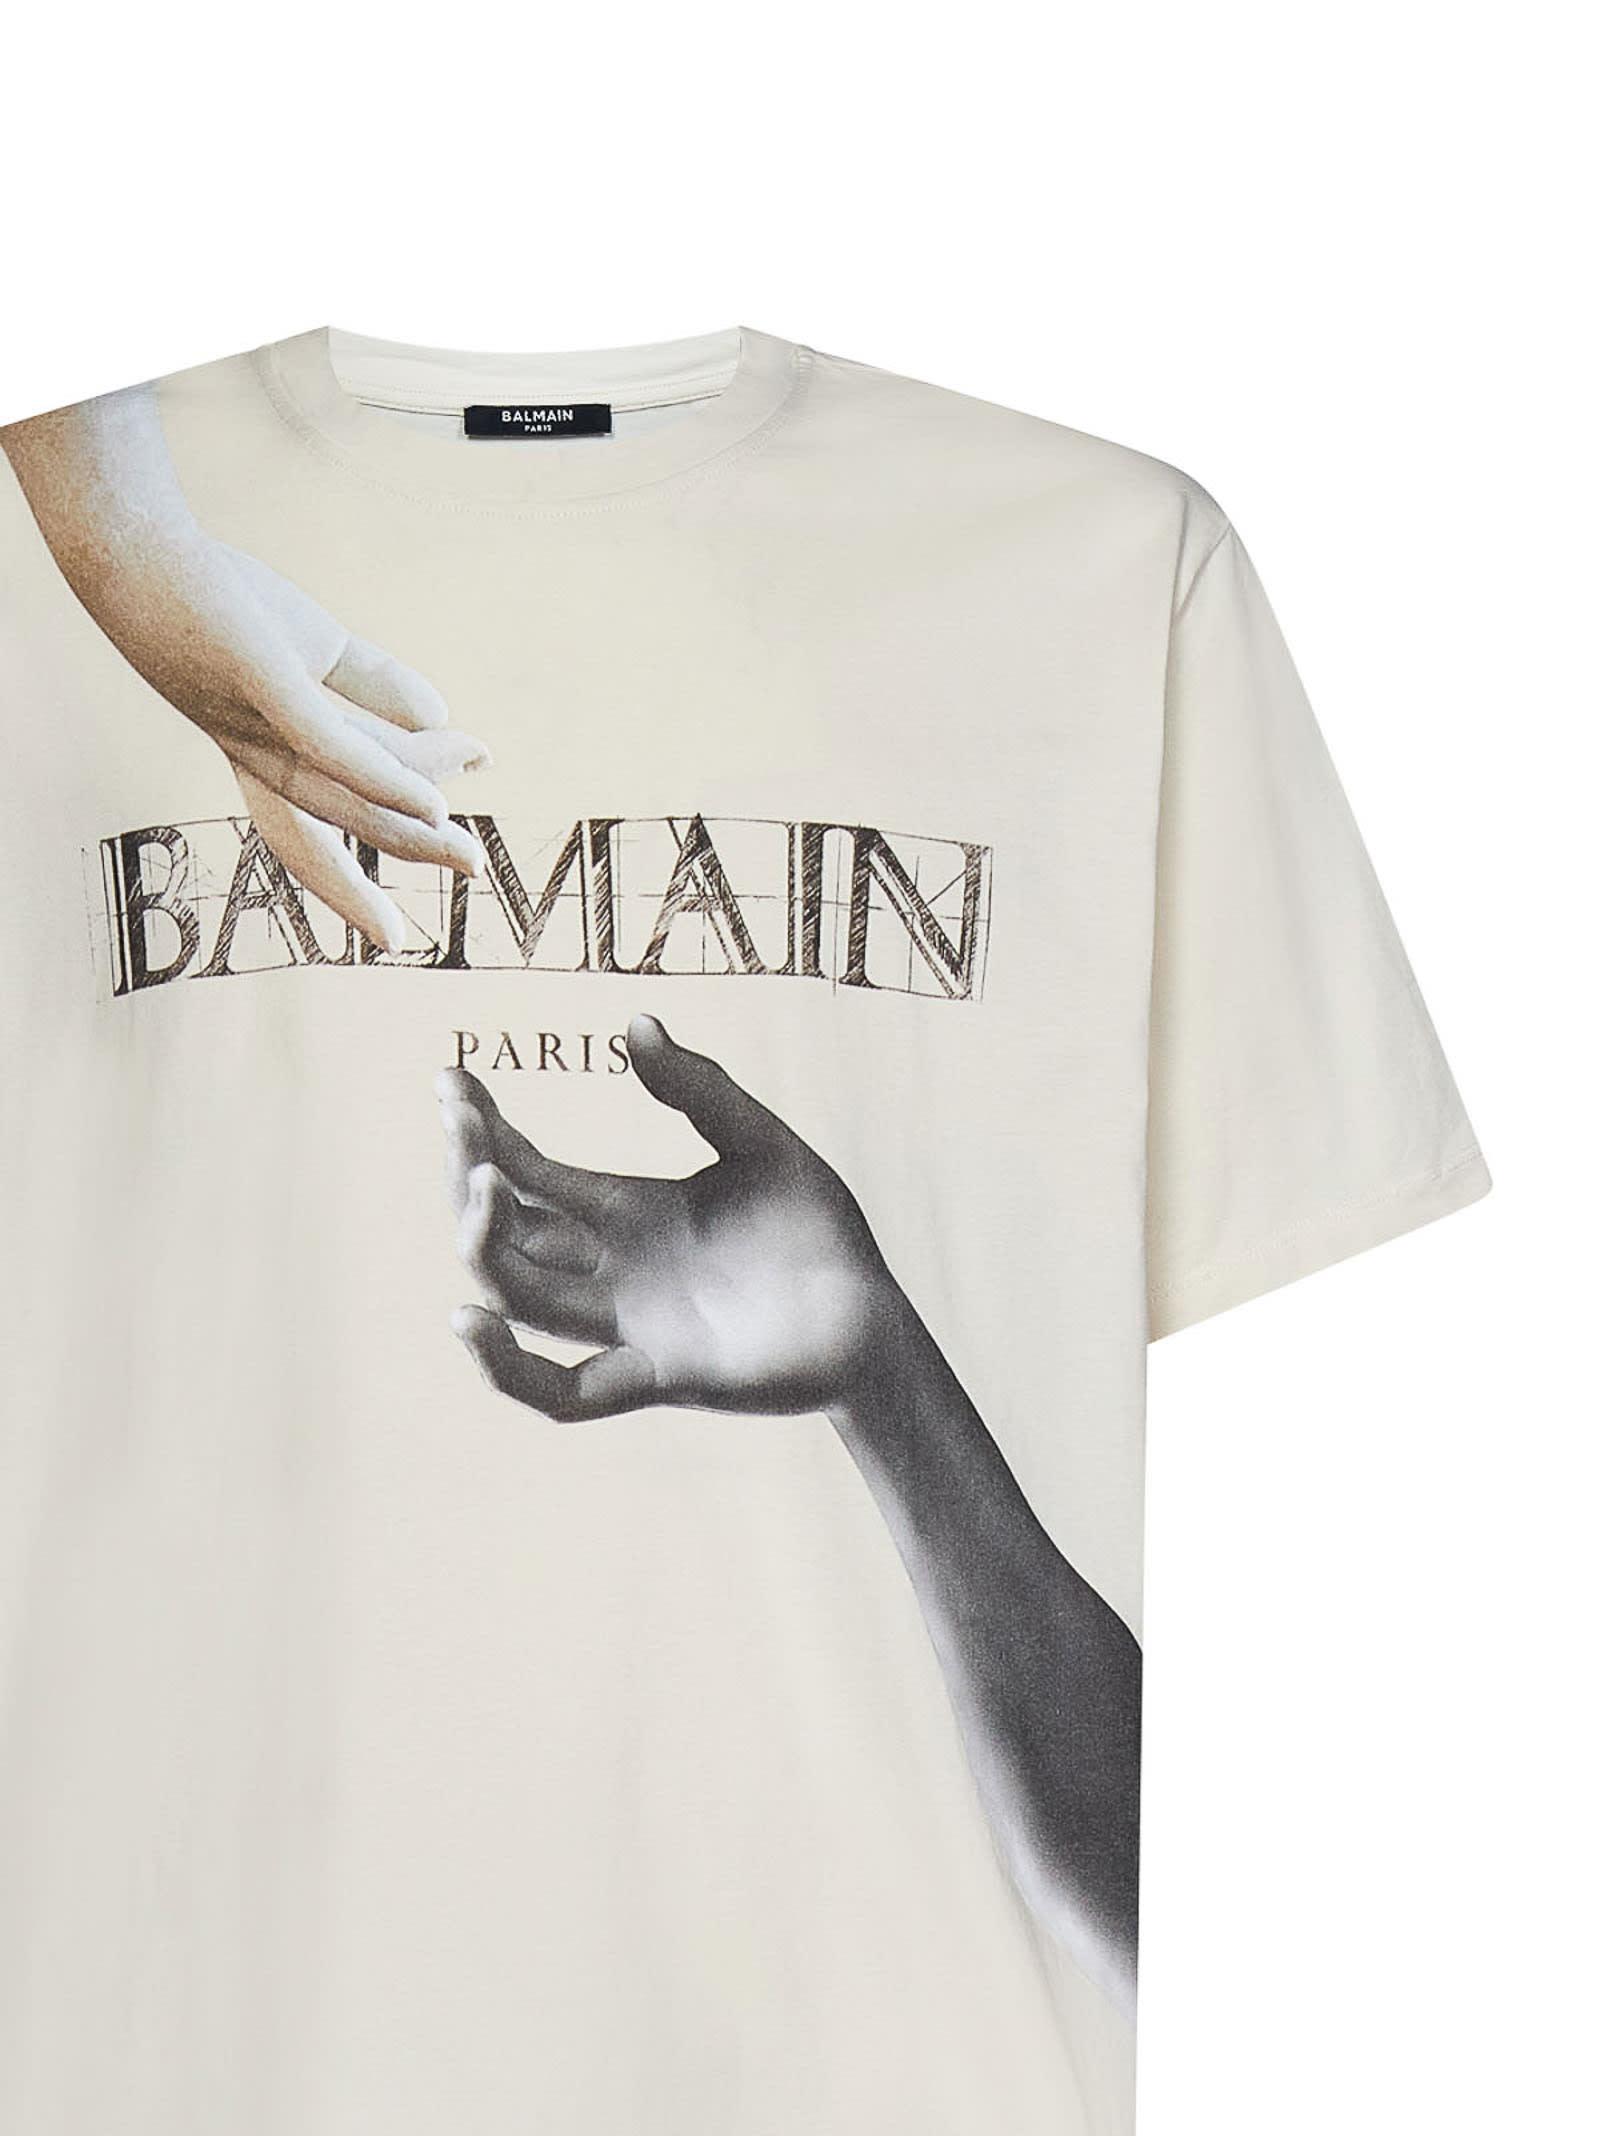 Balmain Paris T-shirt in White for Men | Lyst UK